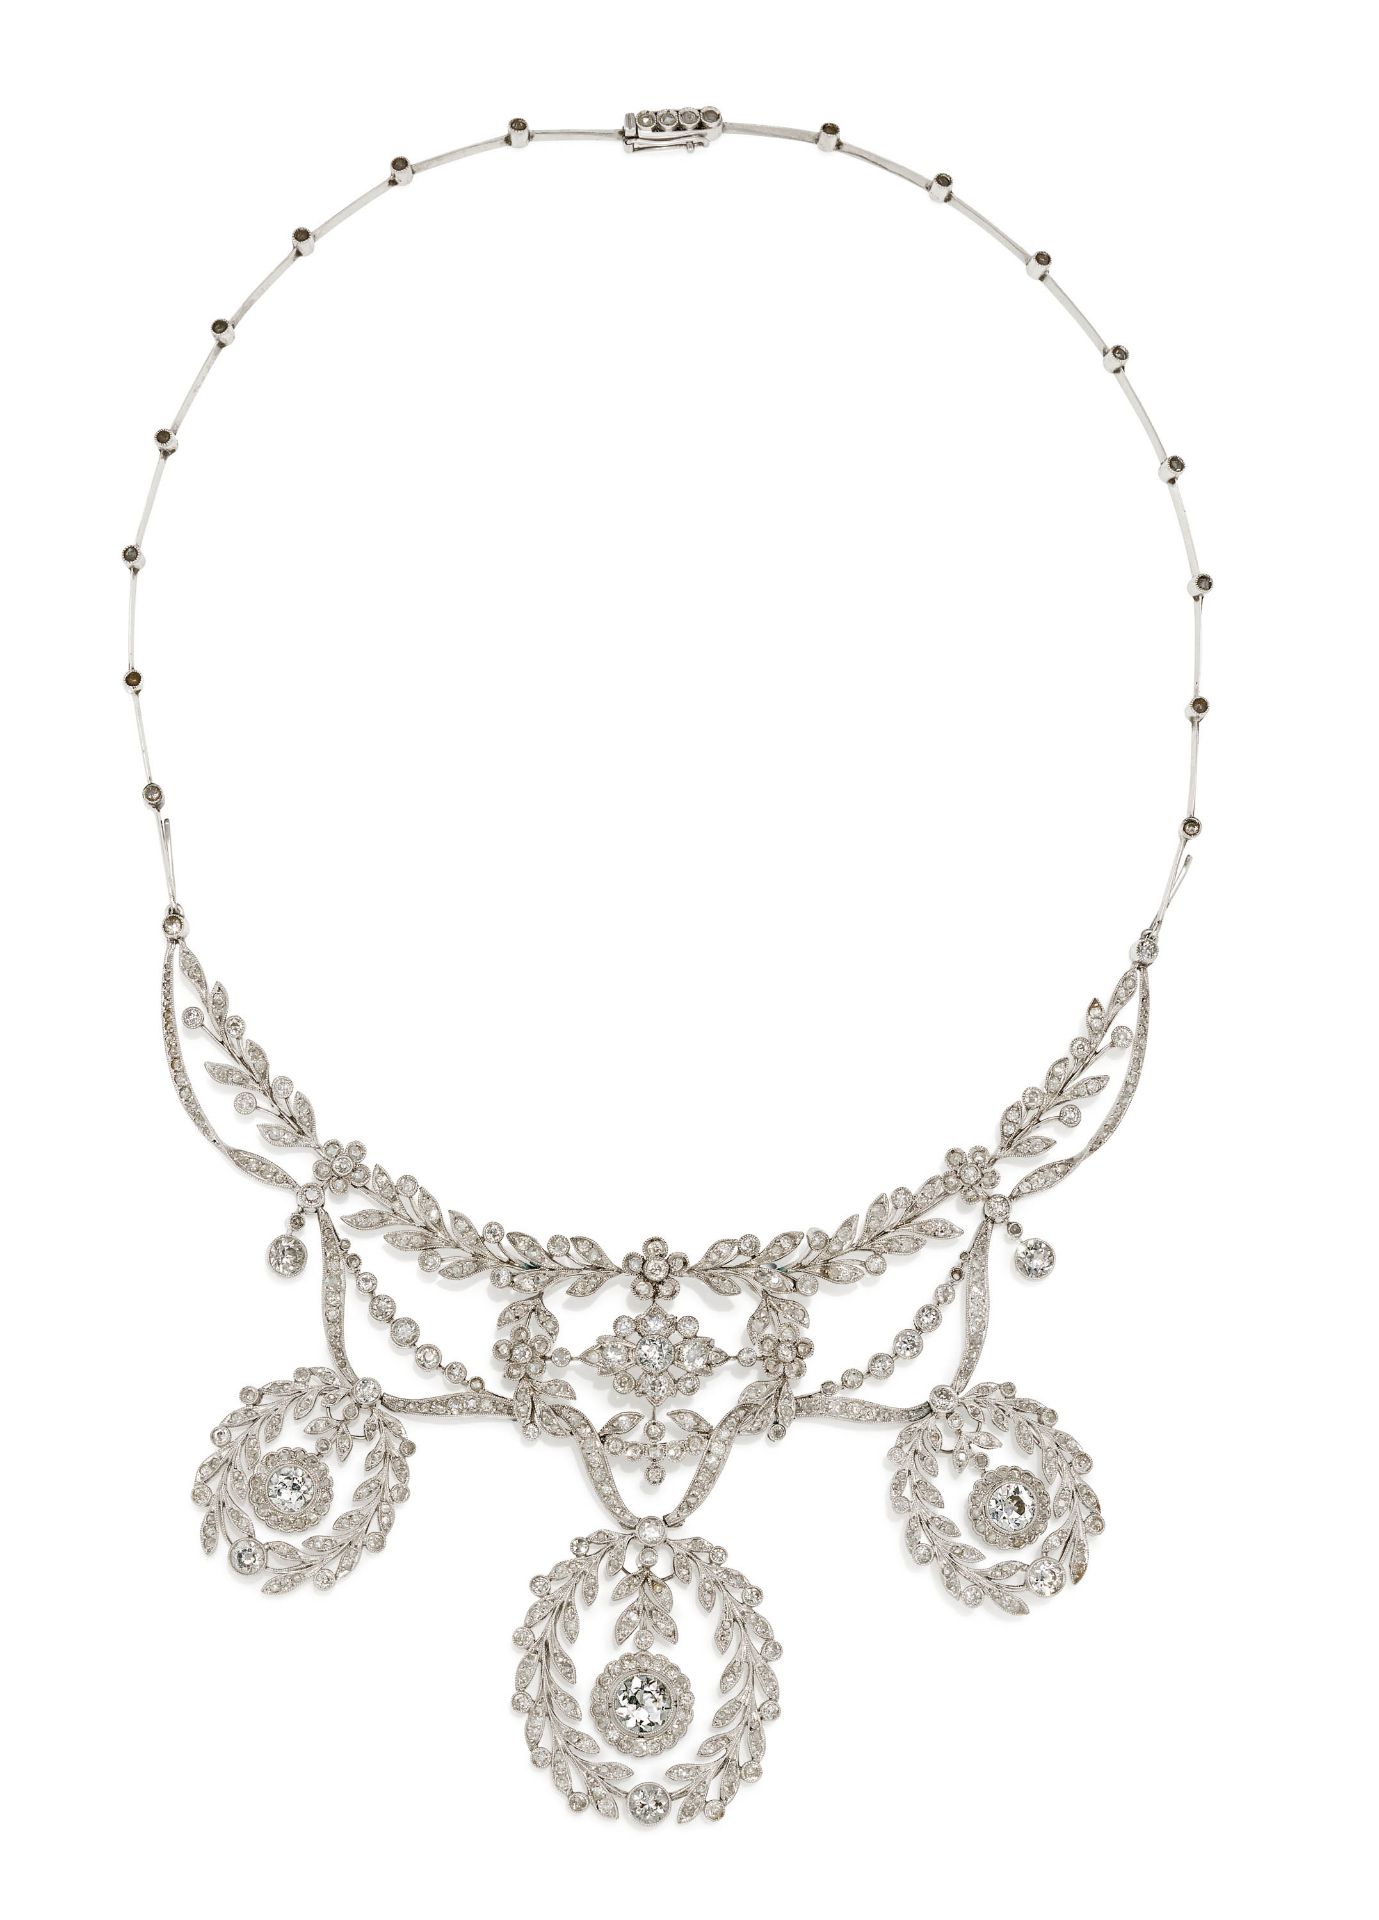  Historical-Diamond-Necklace - Image 2 of 6